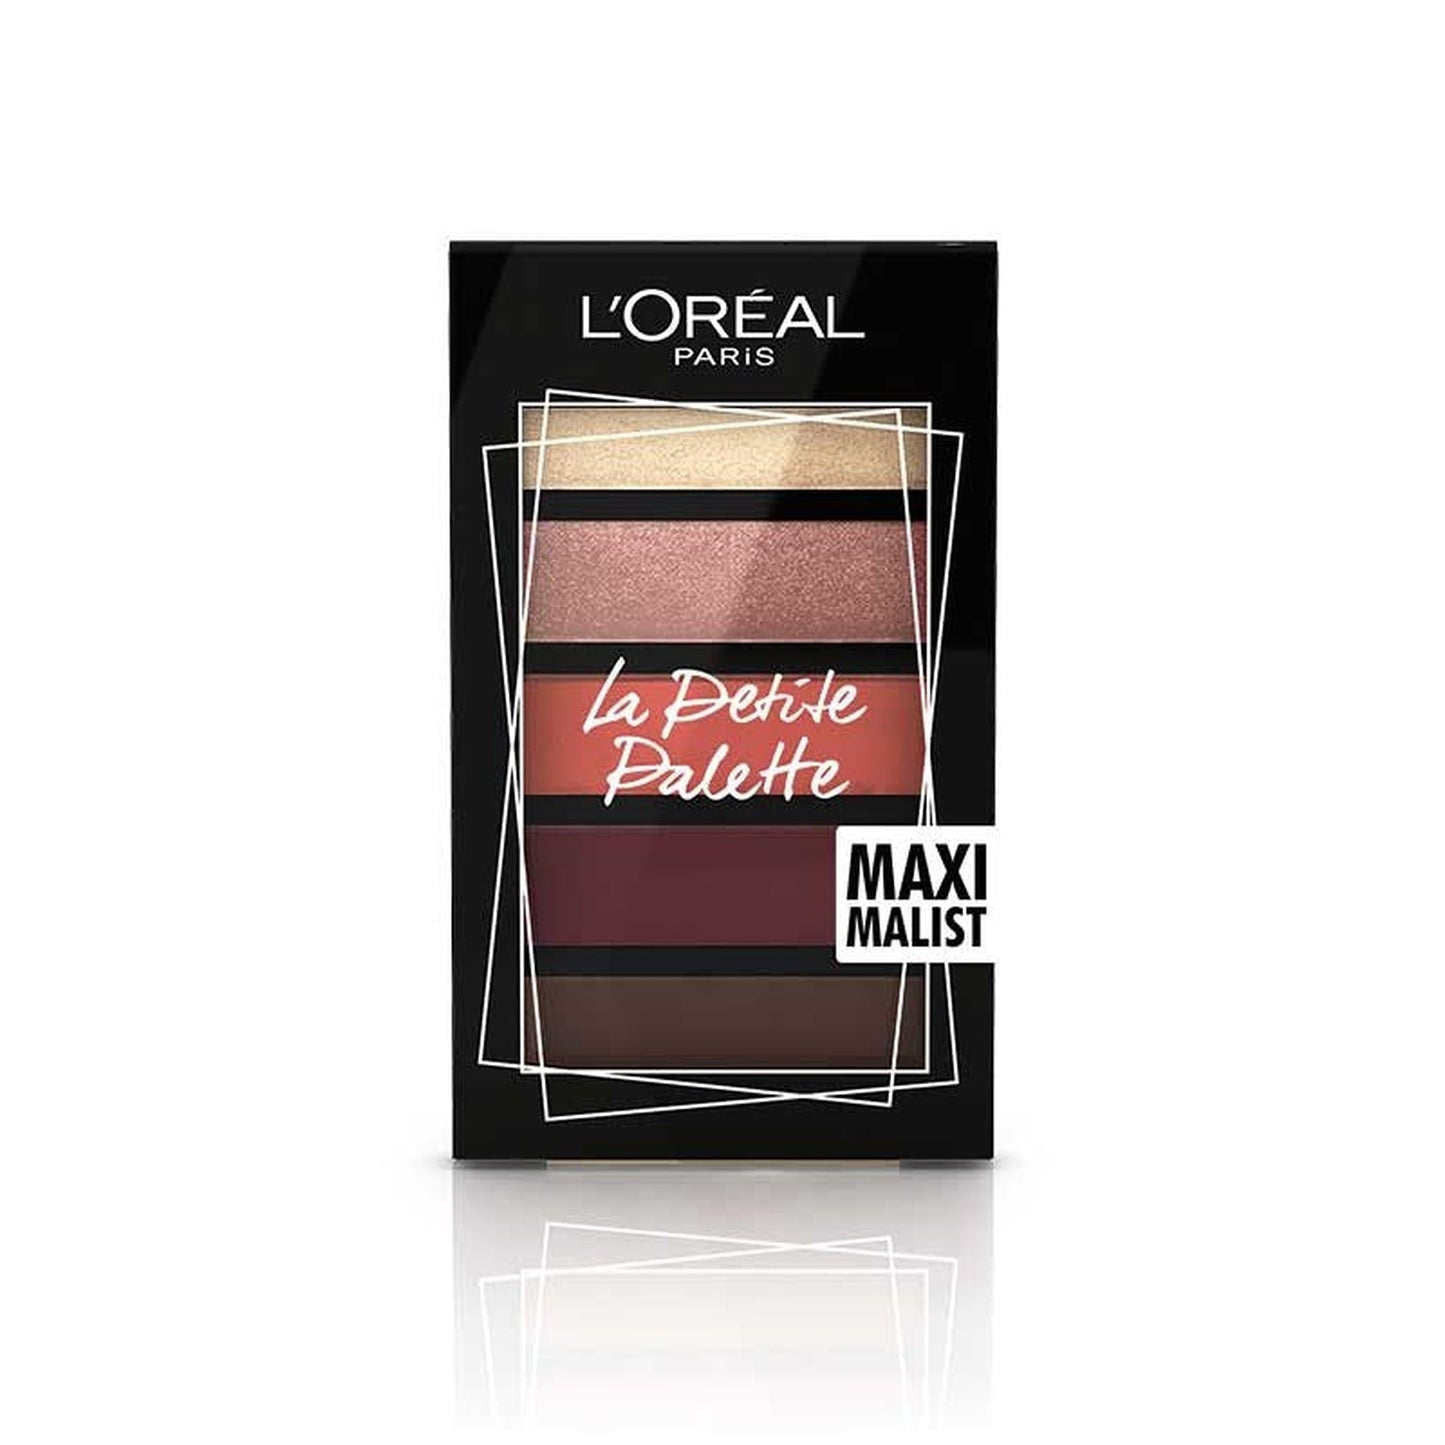 L'Oreal Paris Mini Eyeshadow Palette 01 Maximalist-L'Oreal-BeautyNmakeup.co.uk